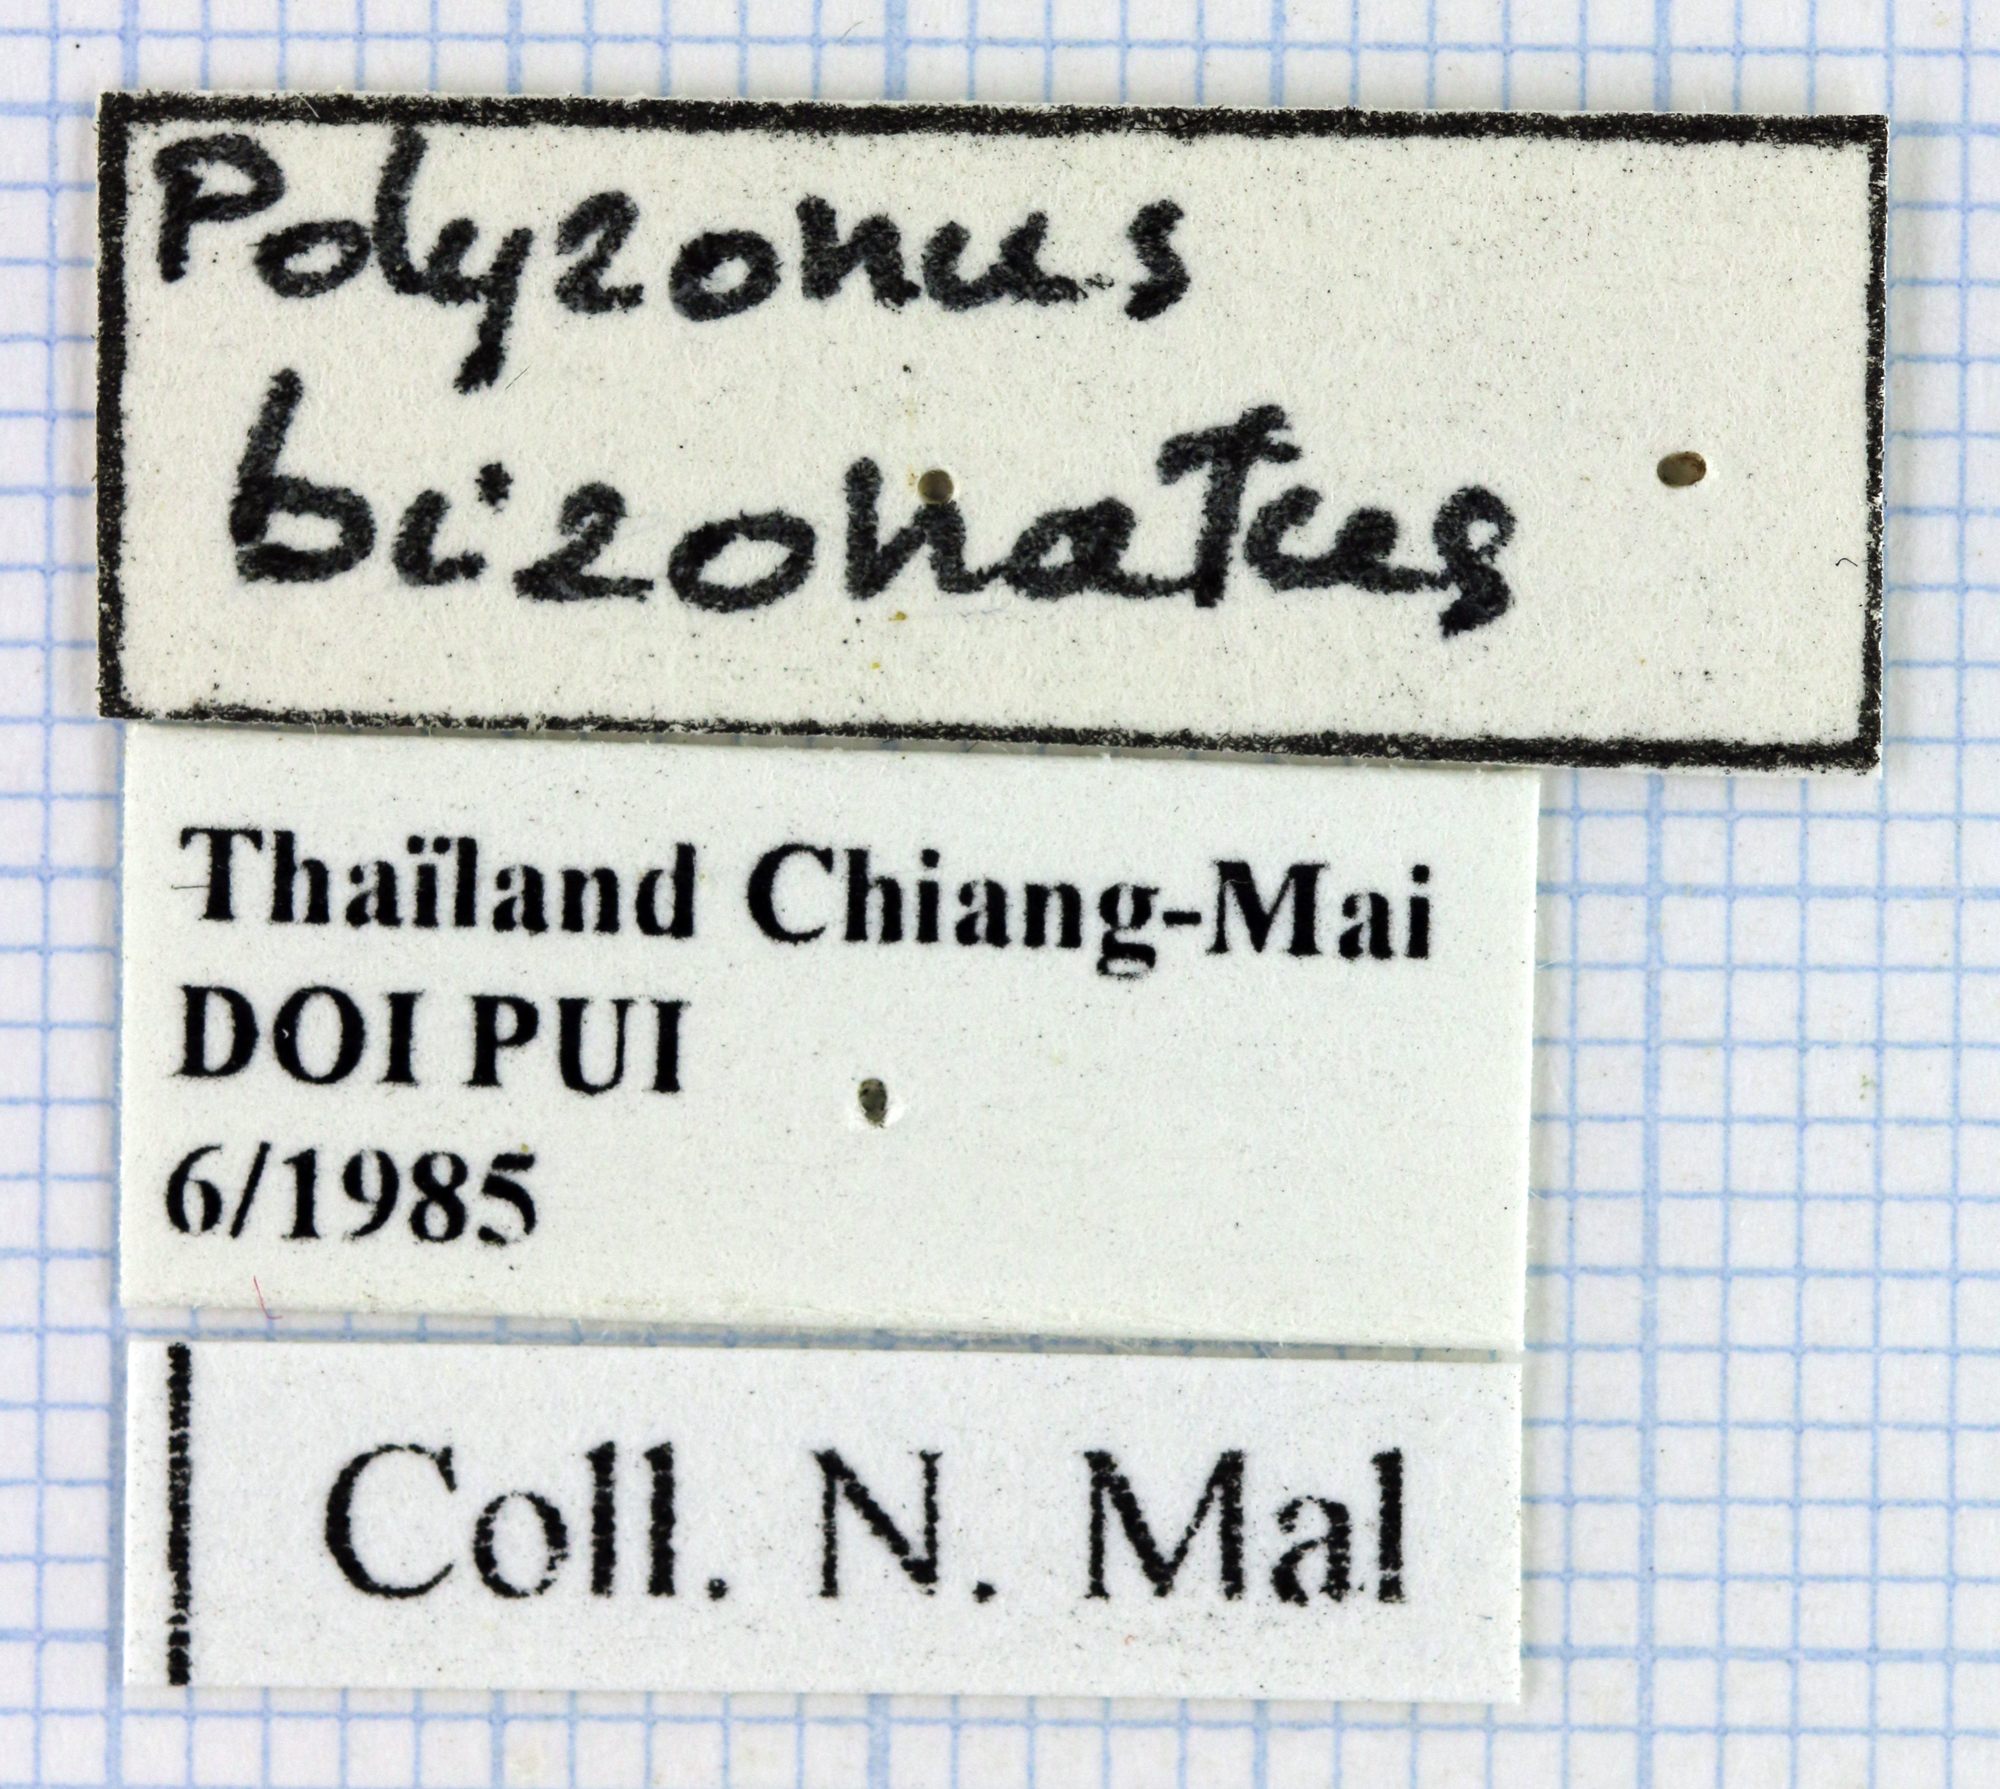 Polyzonus bizonatus 40324.jpg